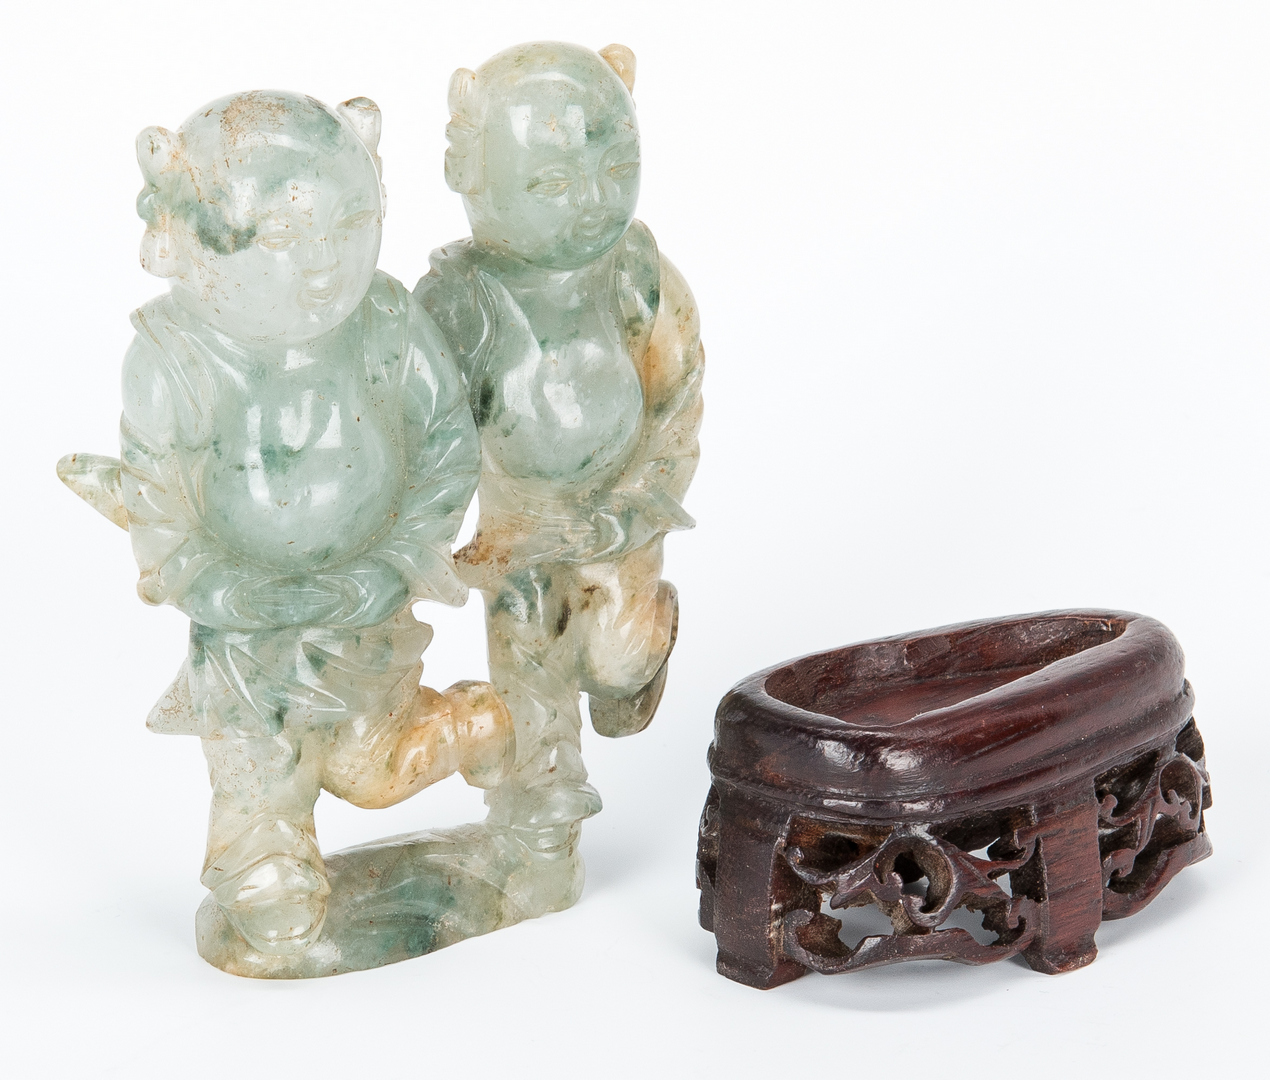 Lot 968: 1 Celadon Jade & 3 Carved Hardstone Items, 1 Cinnabar Bowl